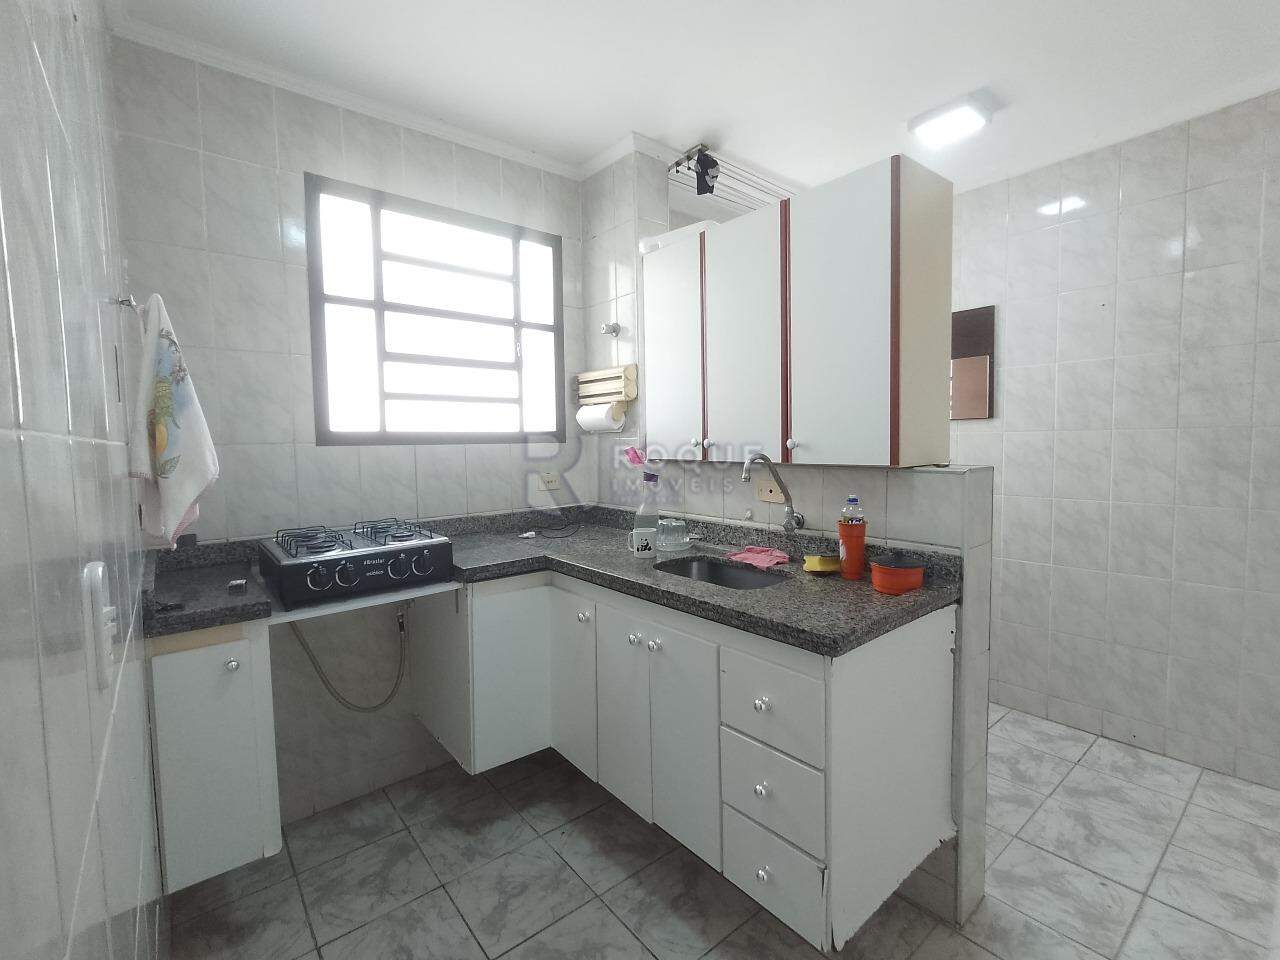 Apartamento para aluguel no bairro Jardim Ipiranga: Cozinha